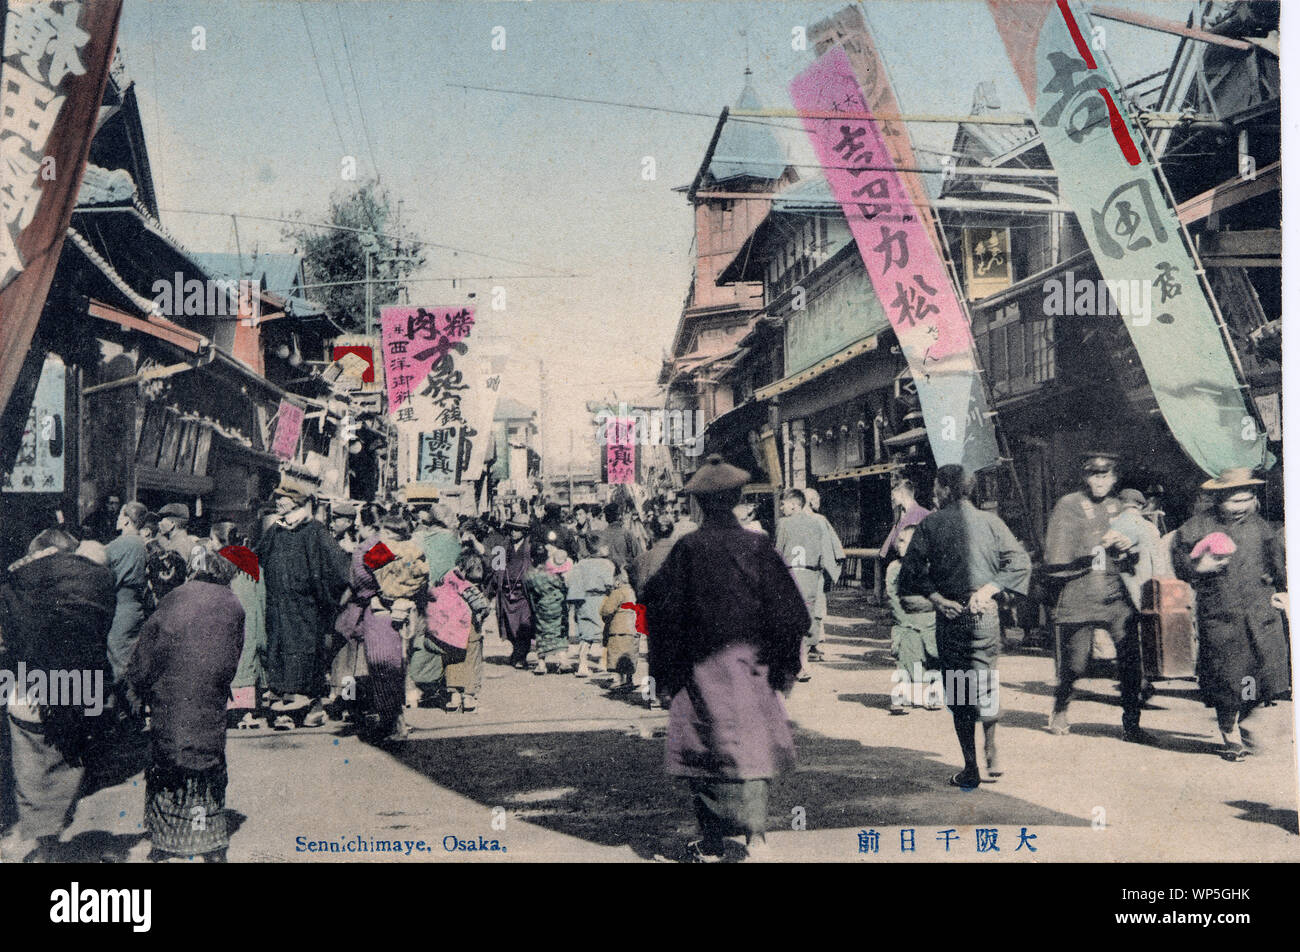 [ 1910s Japan - Sennichimae Entertainment District in Osaka ] —   People walk under flags at Sennichimae, Osaka.  Together with Dotonbori, Sennichimae was Osaka’s main entertainment area since the Edo Period (1603-1868).  20th century vintage postcard. Stock Photo